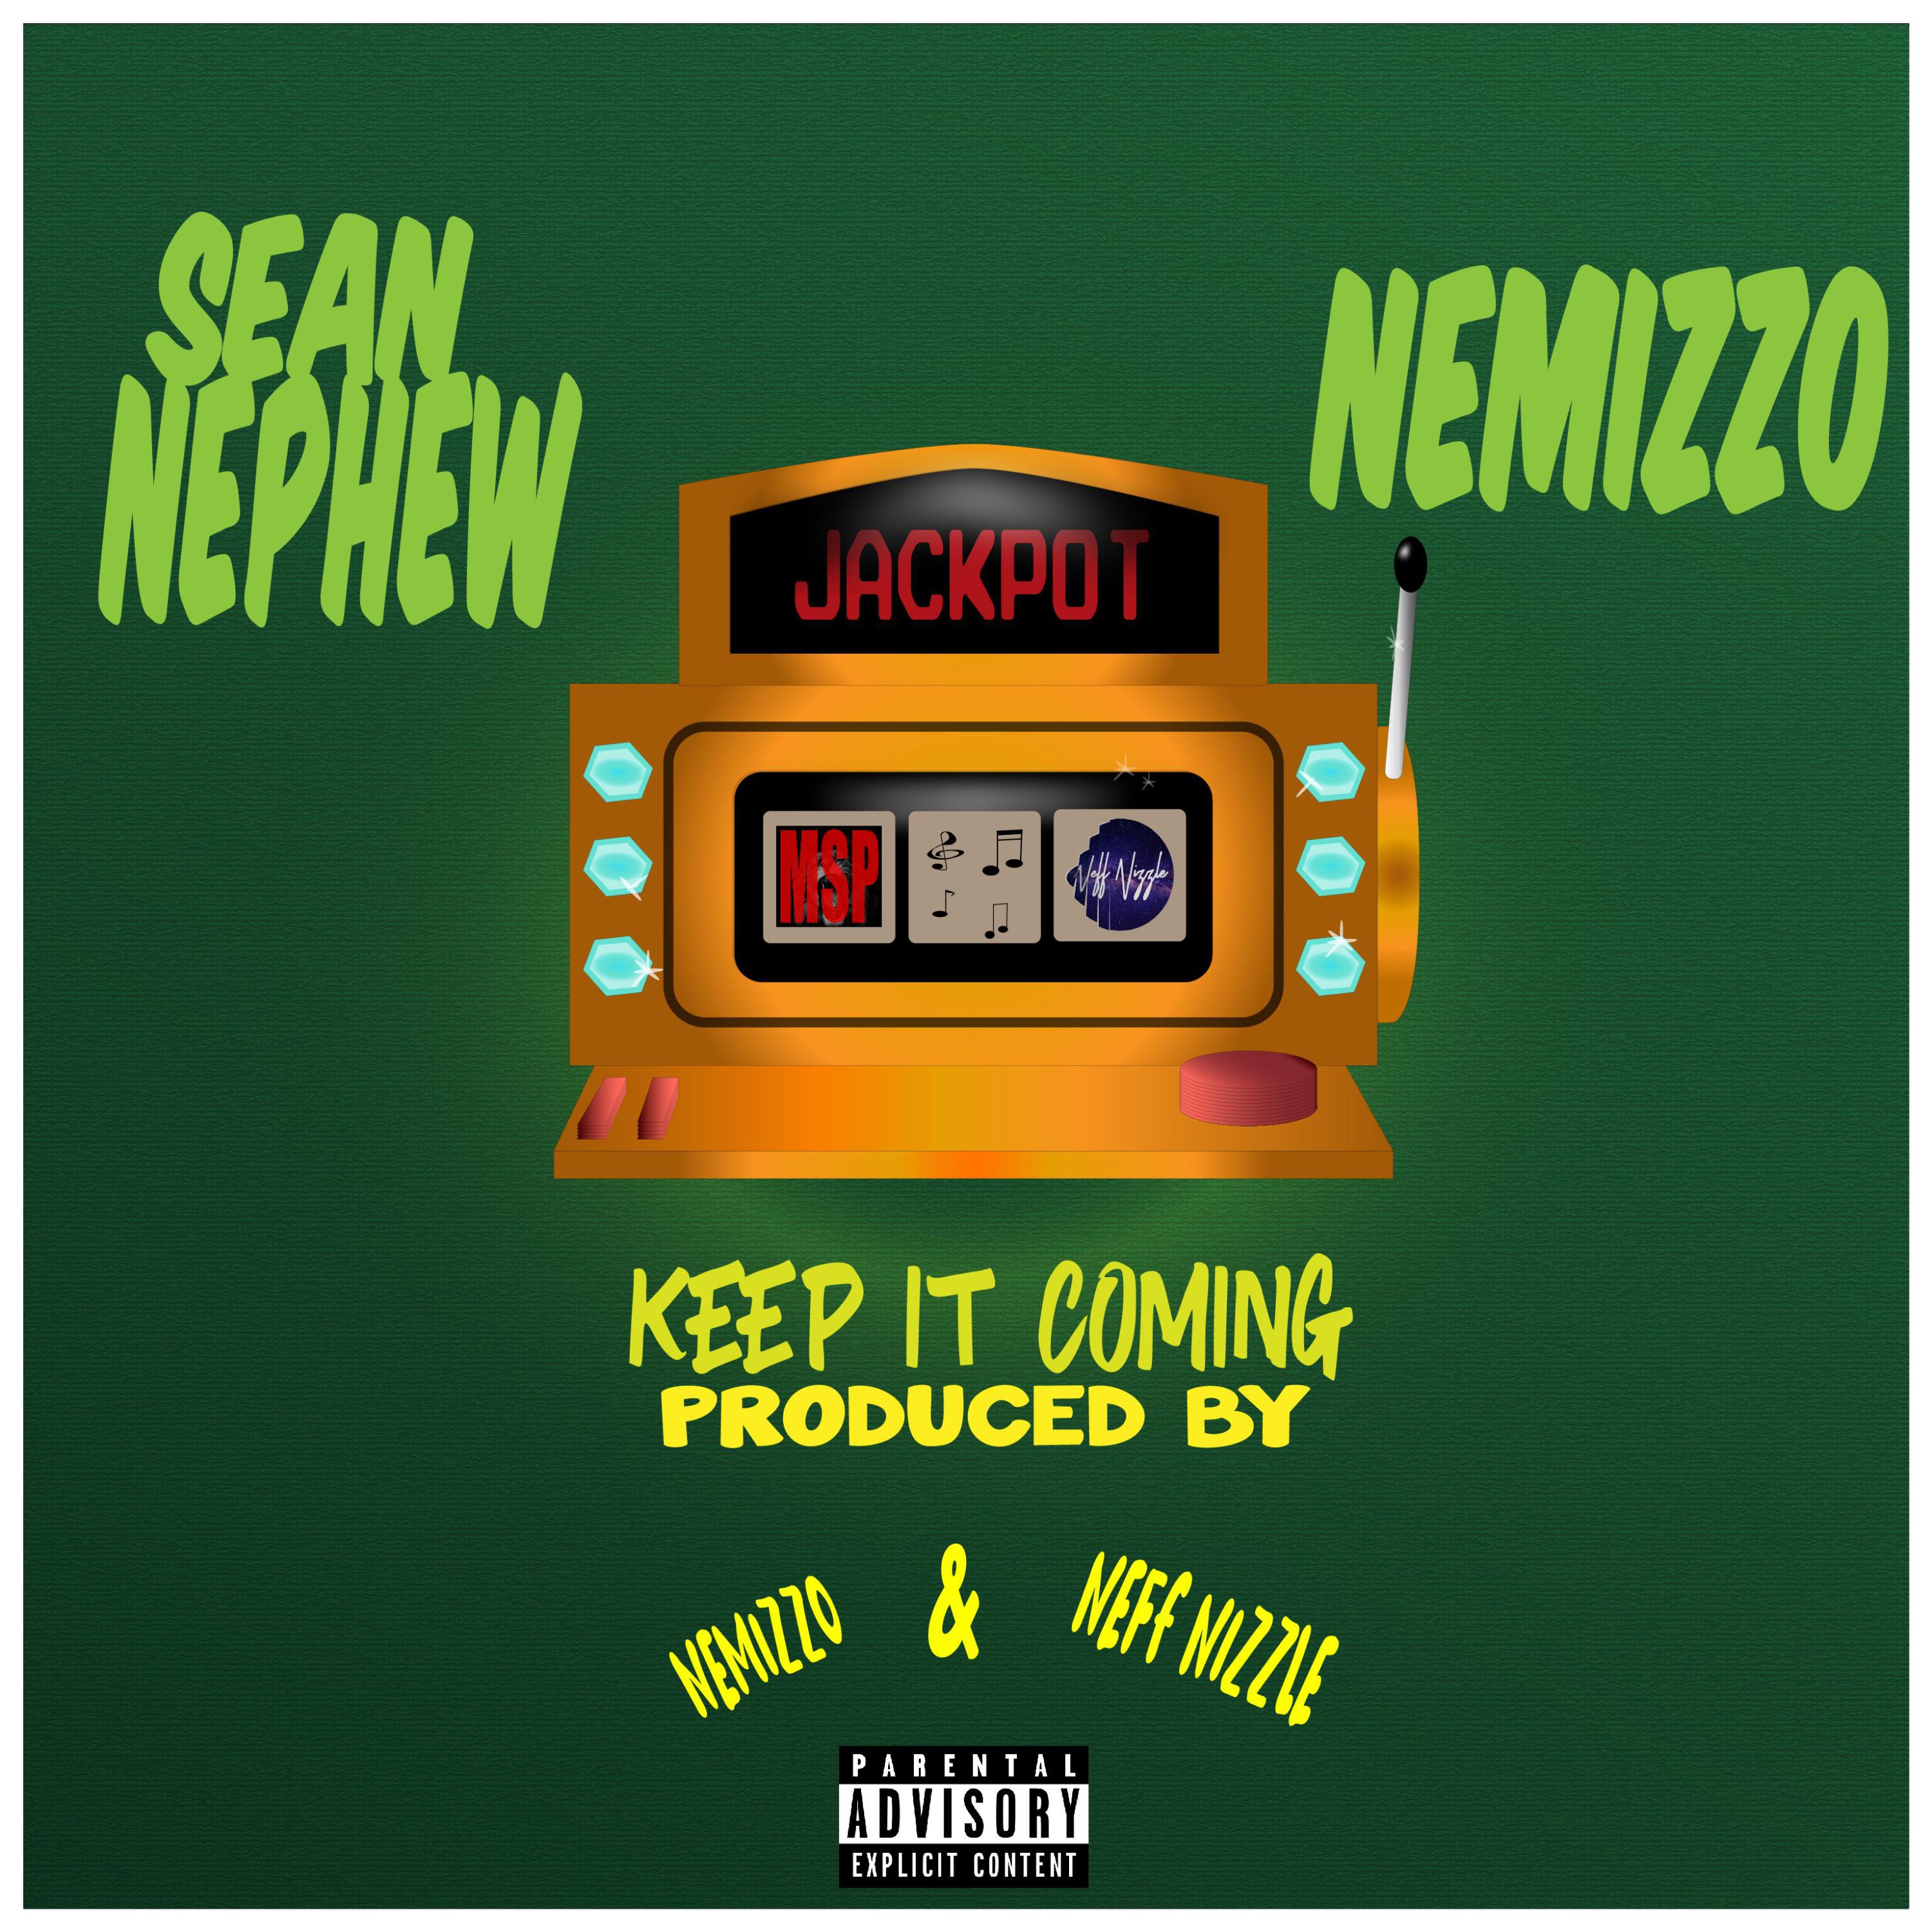 Sean Nephew - Keep It Coming (feat. Nemizzo)